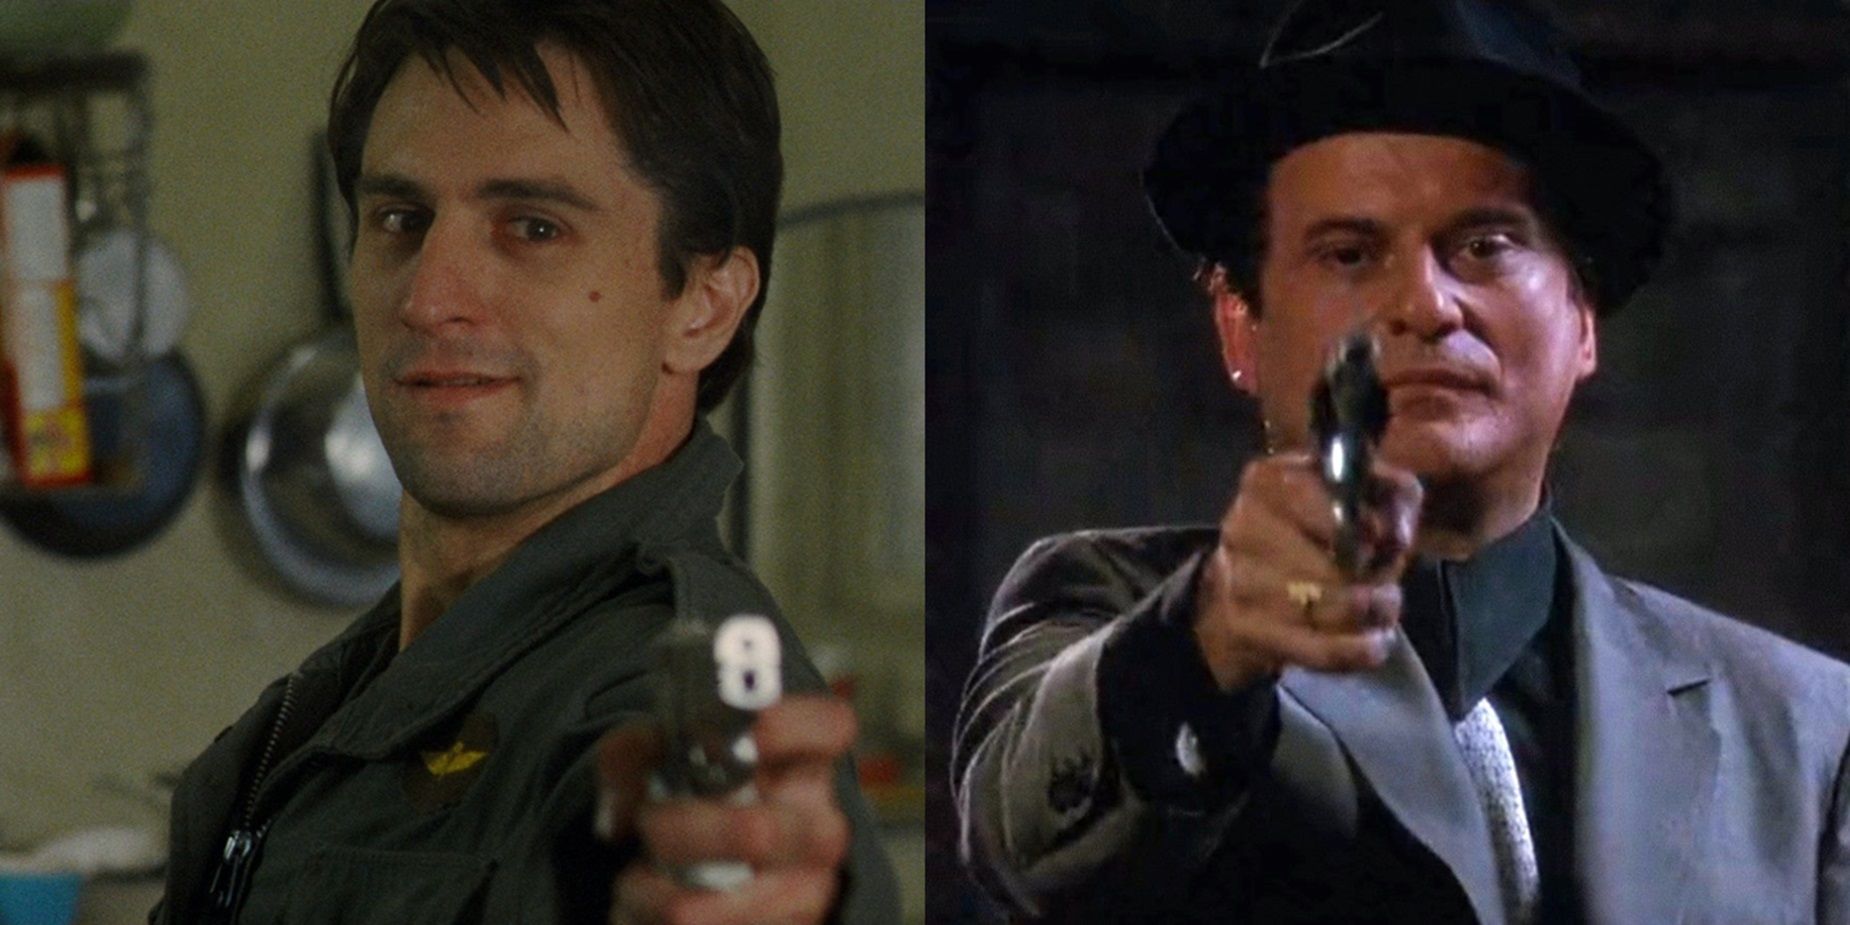 Split image of Robert De Niro with a gun in Taxi Driver and Joe Pesci with a gun in Goodfellas